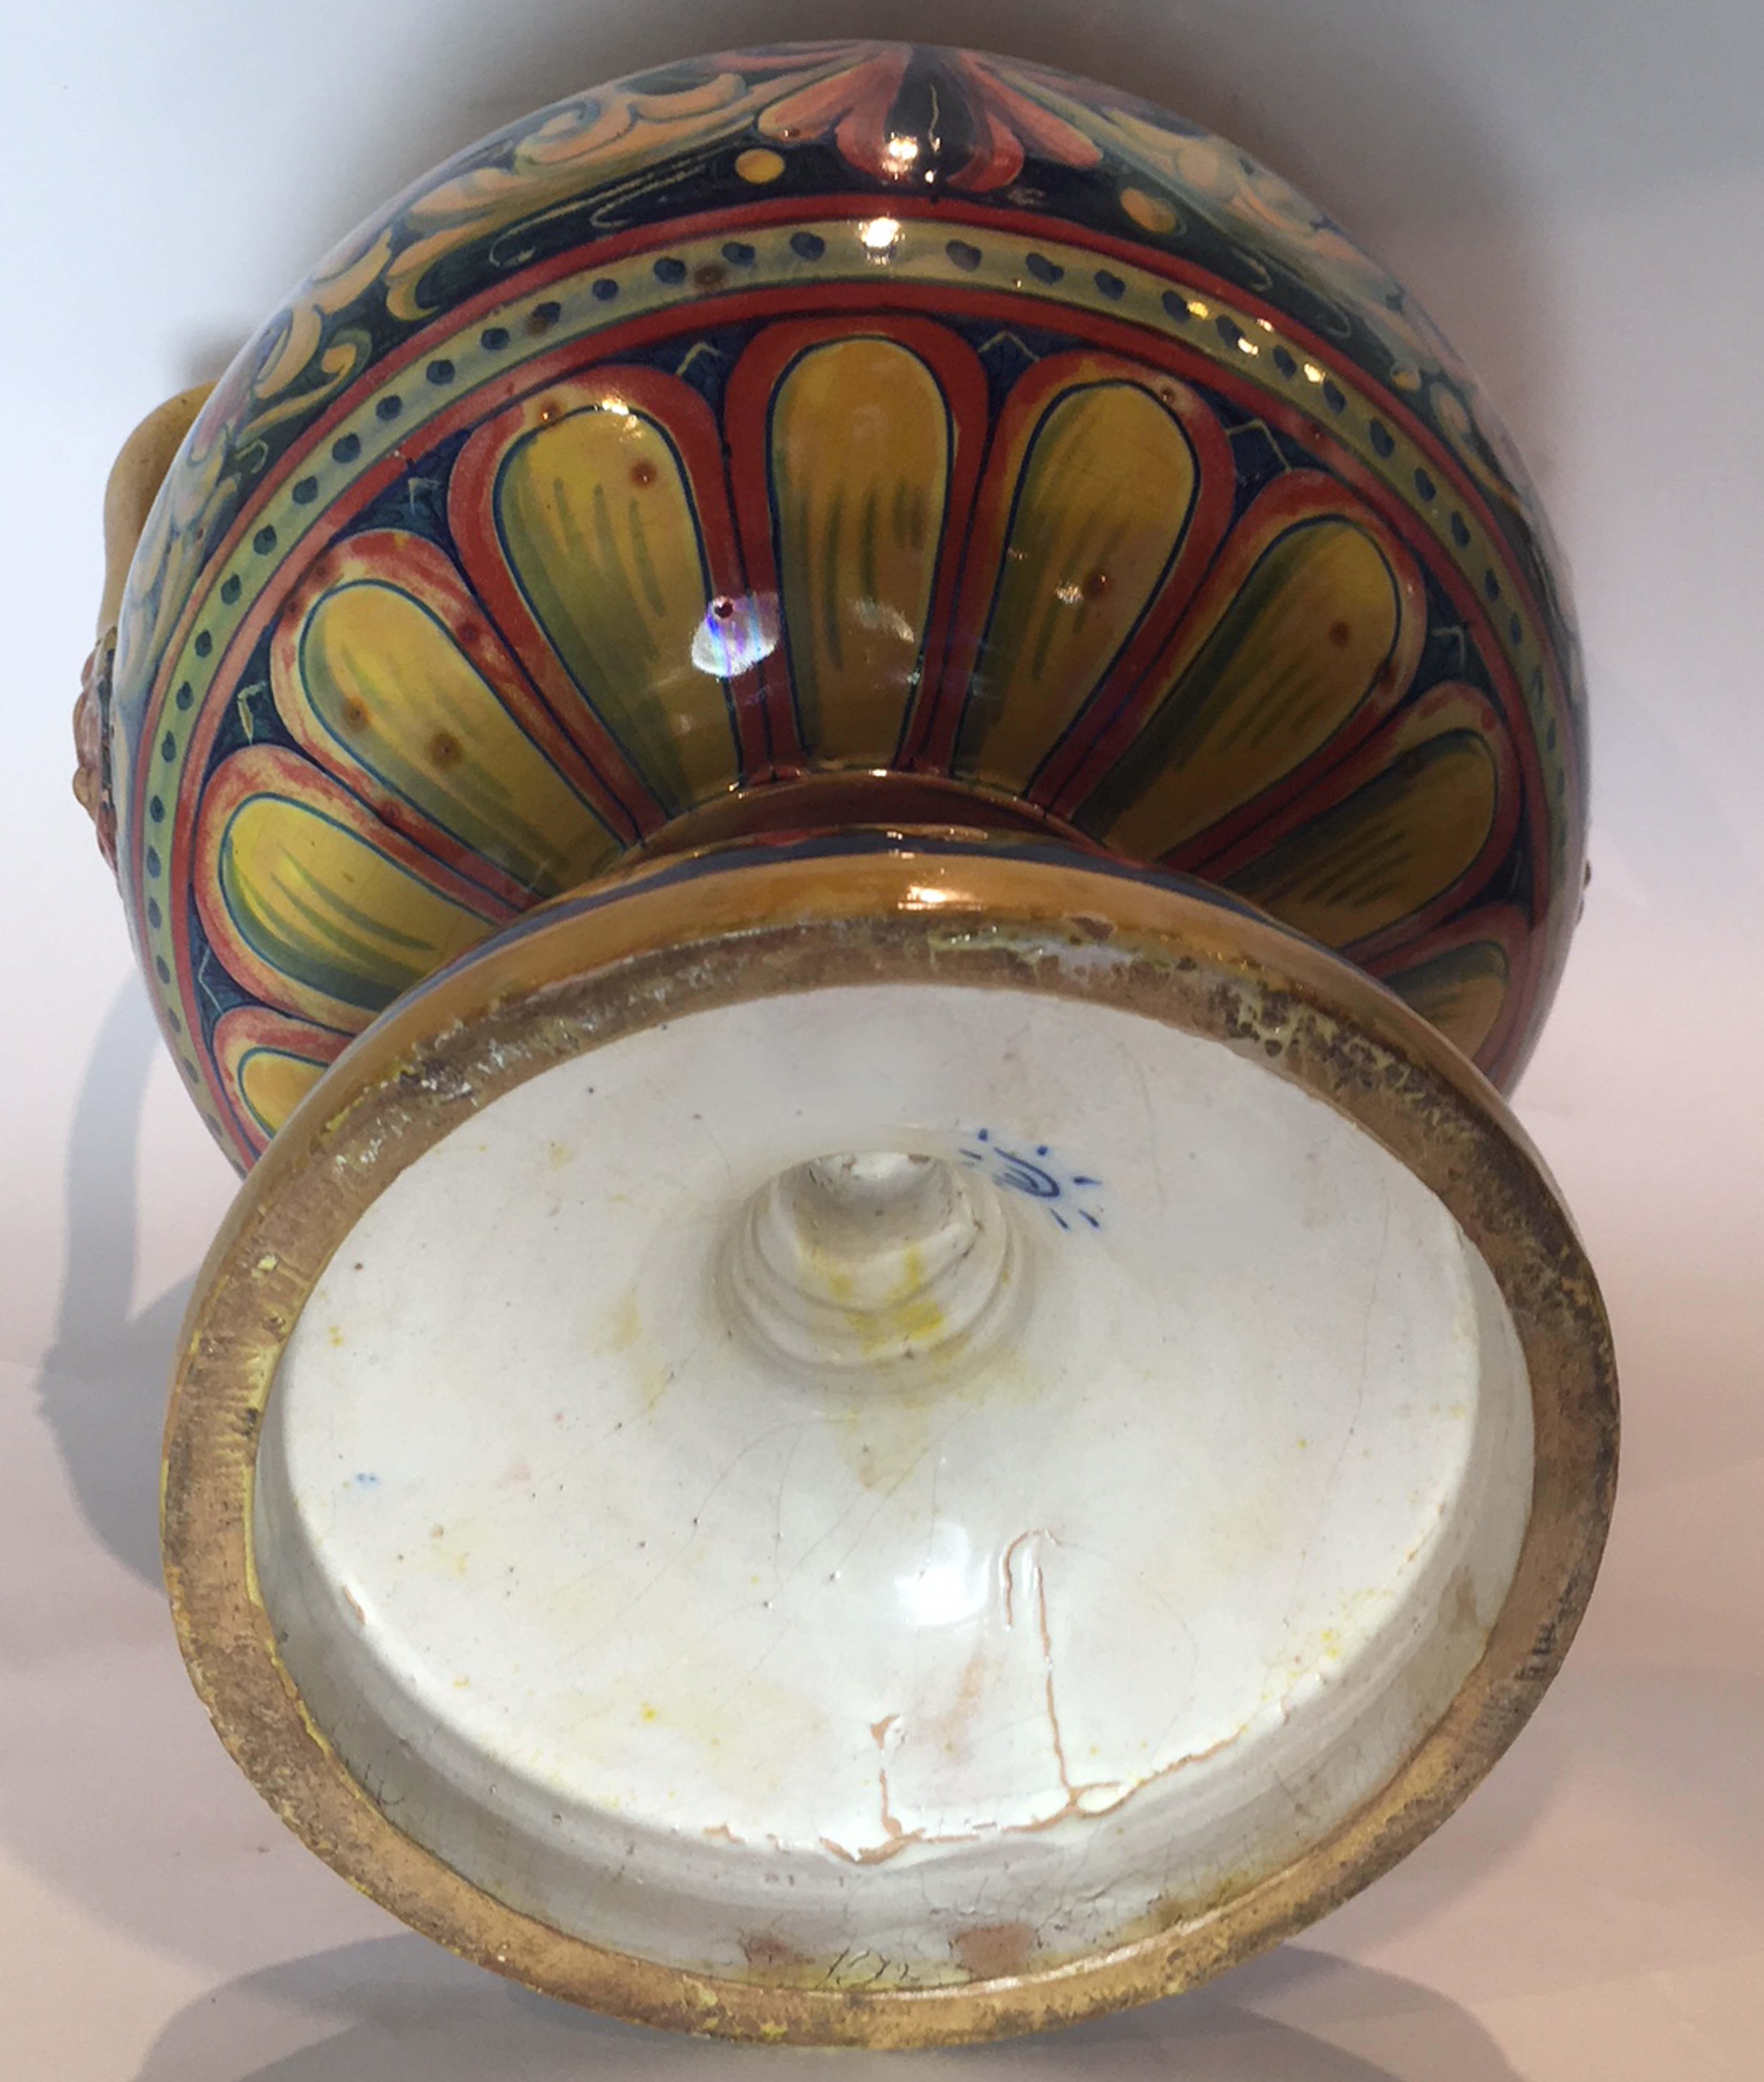 20th Century Renaissence Revival Polychrome Drawings Pottery Gualdo Tadino Vase For Sale 5